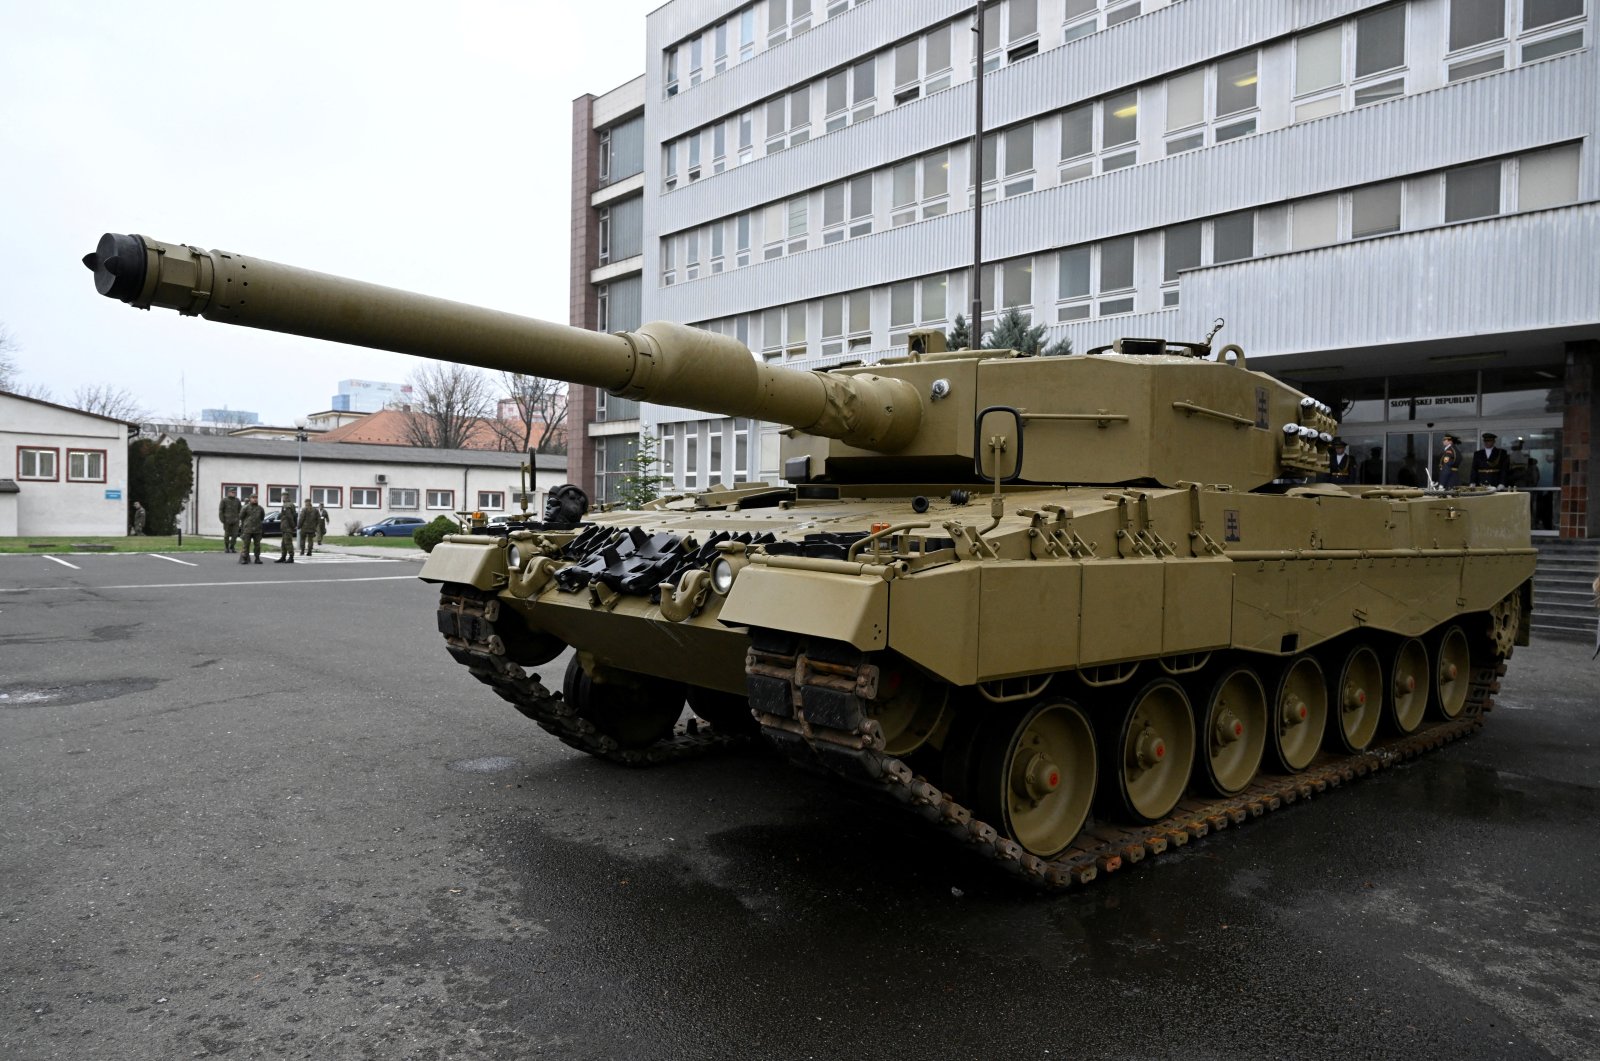 Jerman tidak akan mengizinkan ekspor tank ke Ukraina kecuali AS mengirimnya sendiri